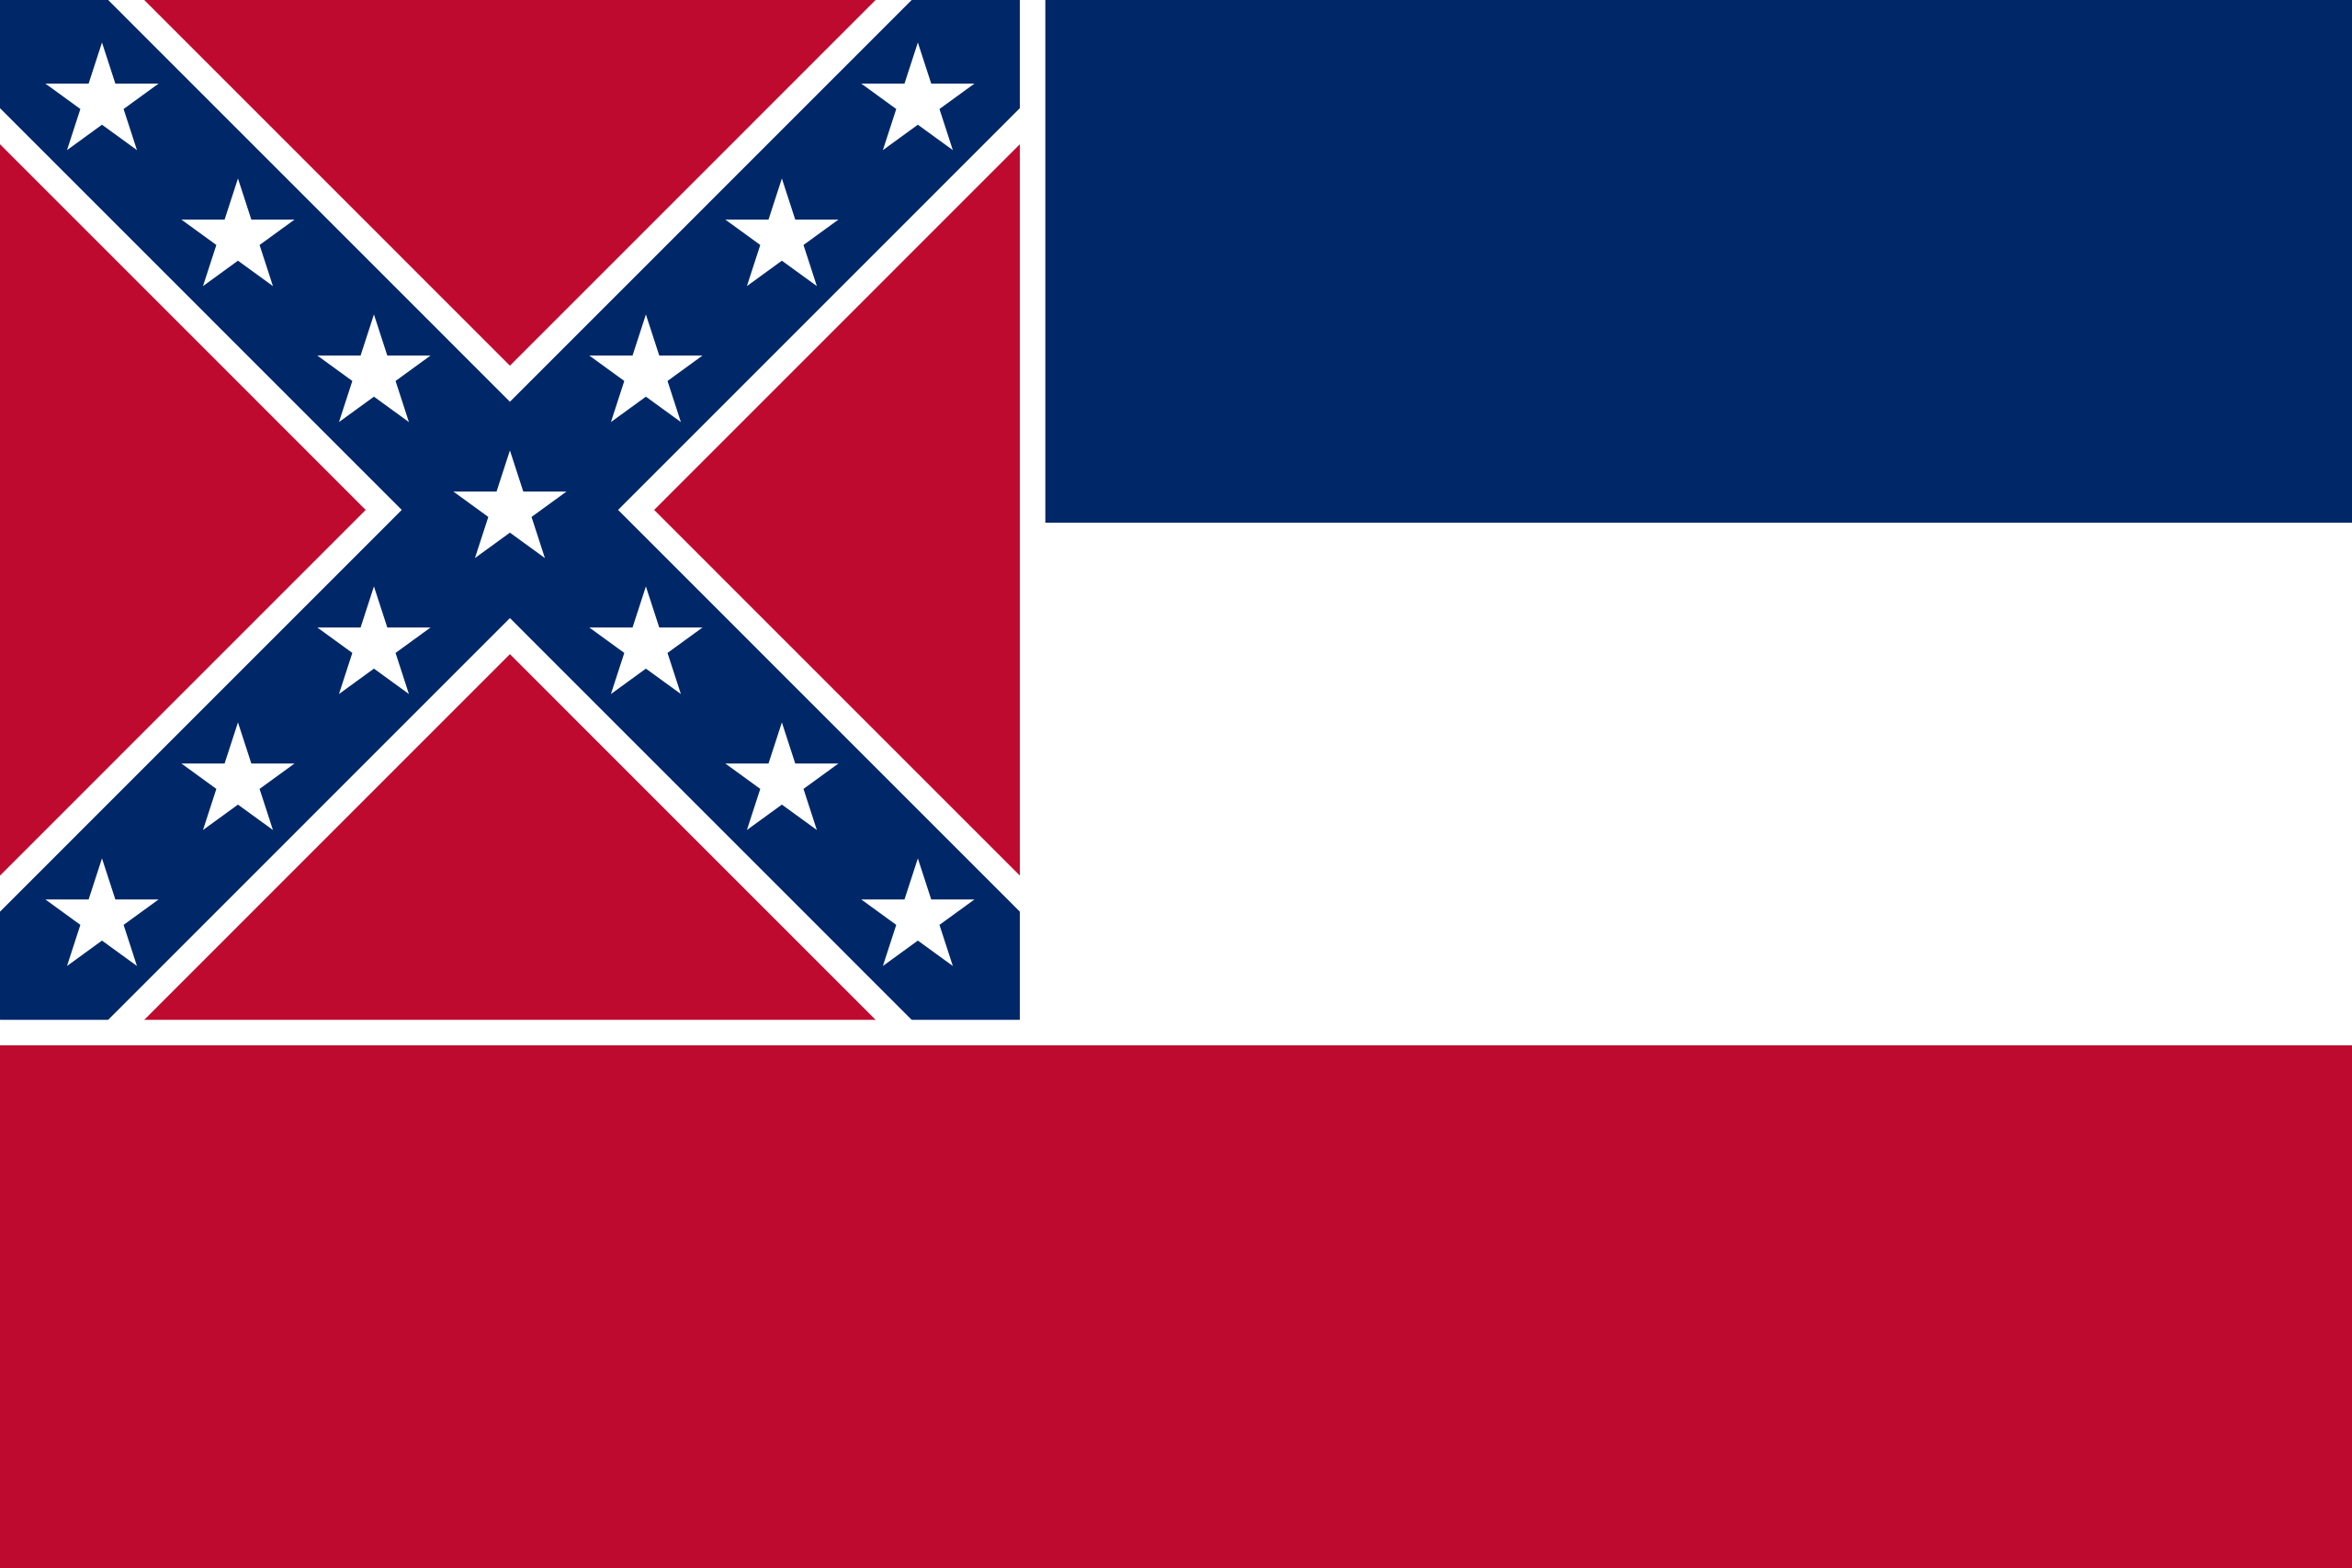 Flag of Mississippi (2001–2020).svg